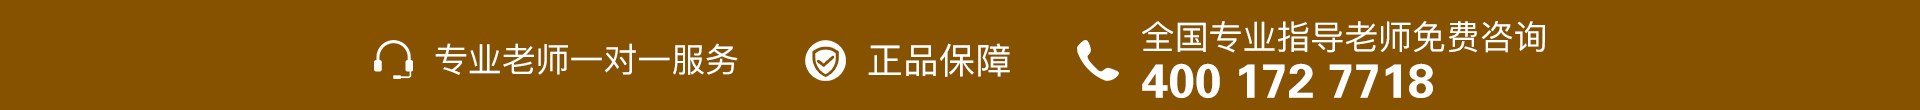 深黄色电话-banner图下方-PC - 副本 (4).jpg